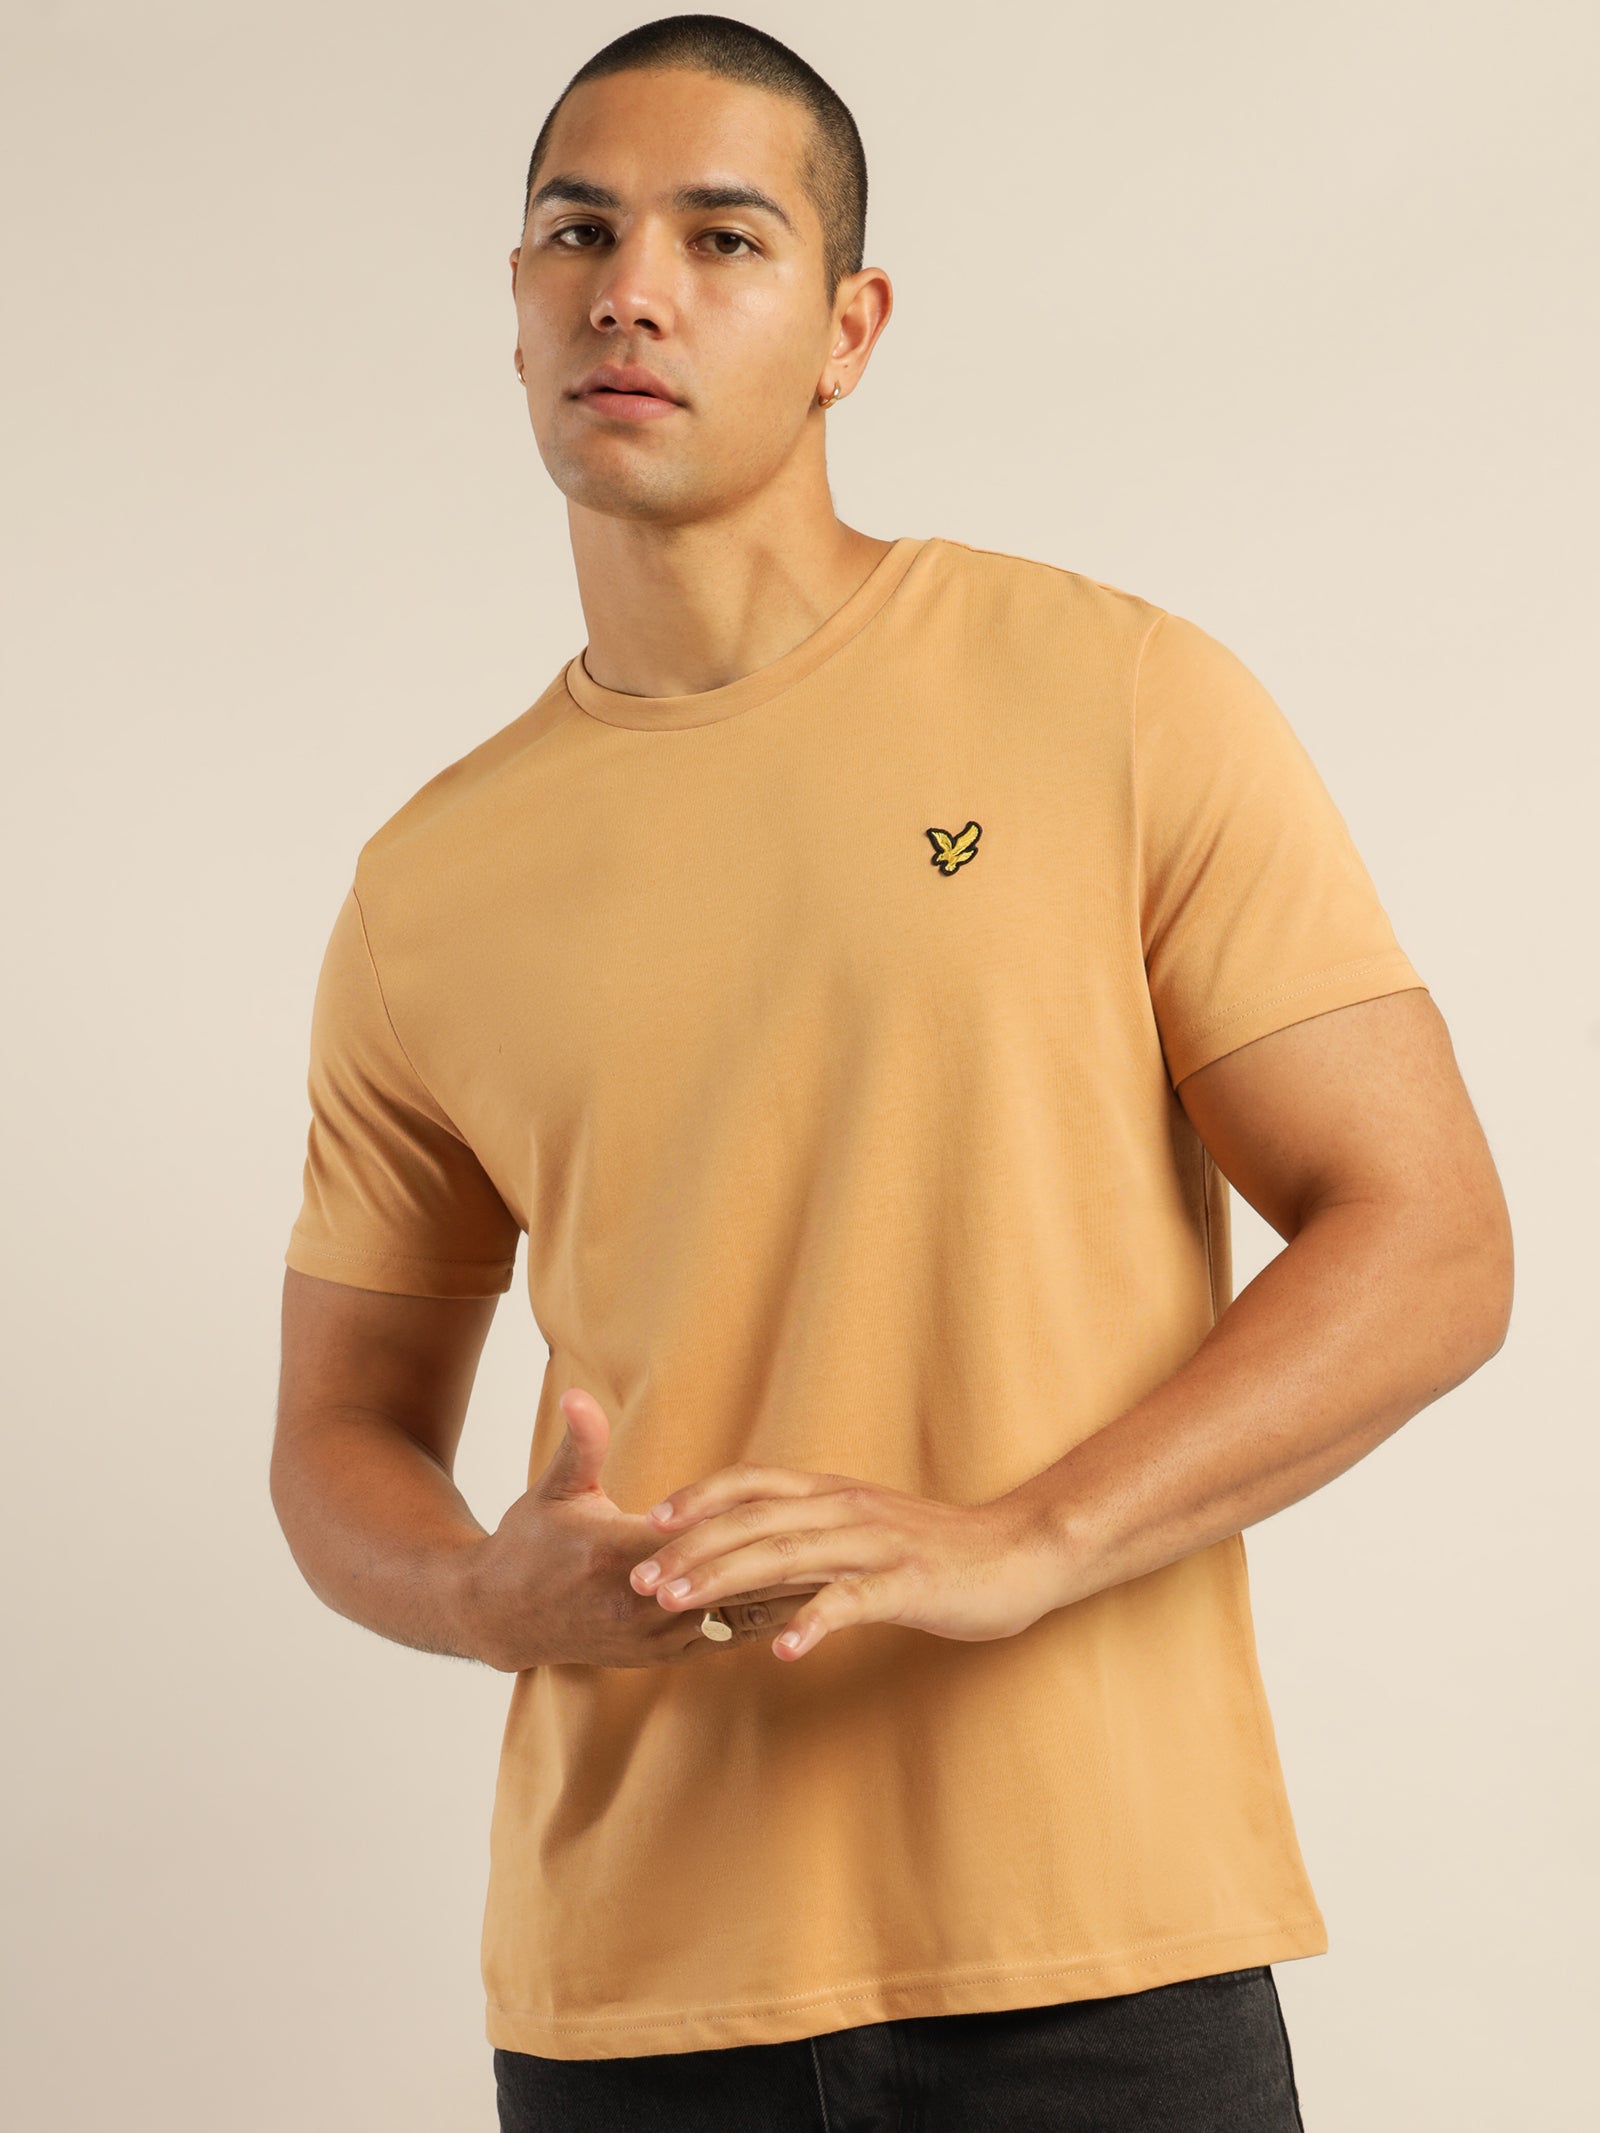 Plain T-Shirt in Tan